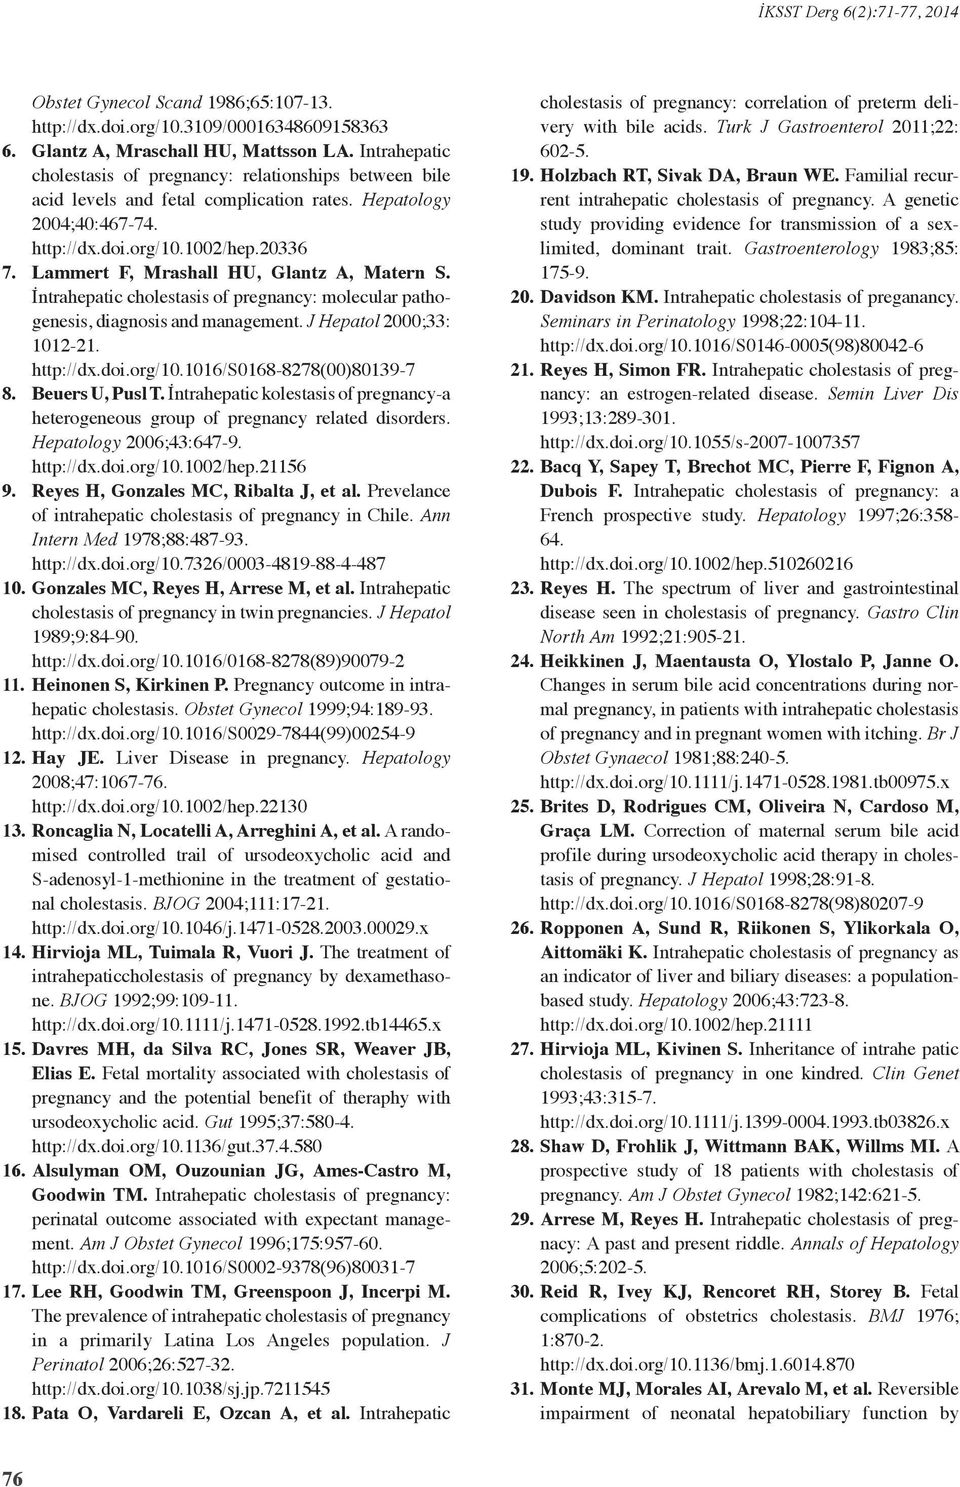 Lammert F, Mrashall HU, Glantz A, Matern S. İntrahepatic cholestasis of pregnancy: molecular pathogenesis, diagnosis and management. J Hepatol 2000;33: 1012-21. http://dx.doi.org/10.